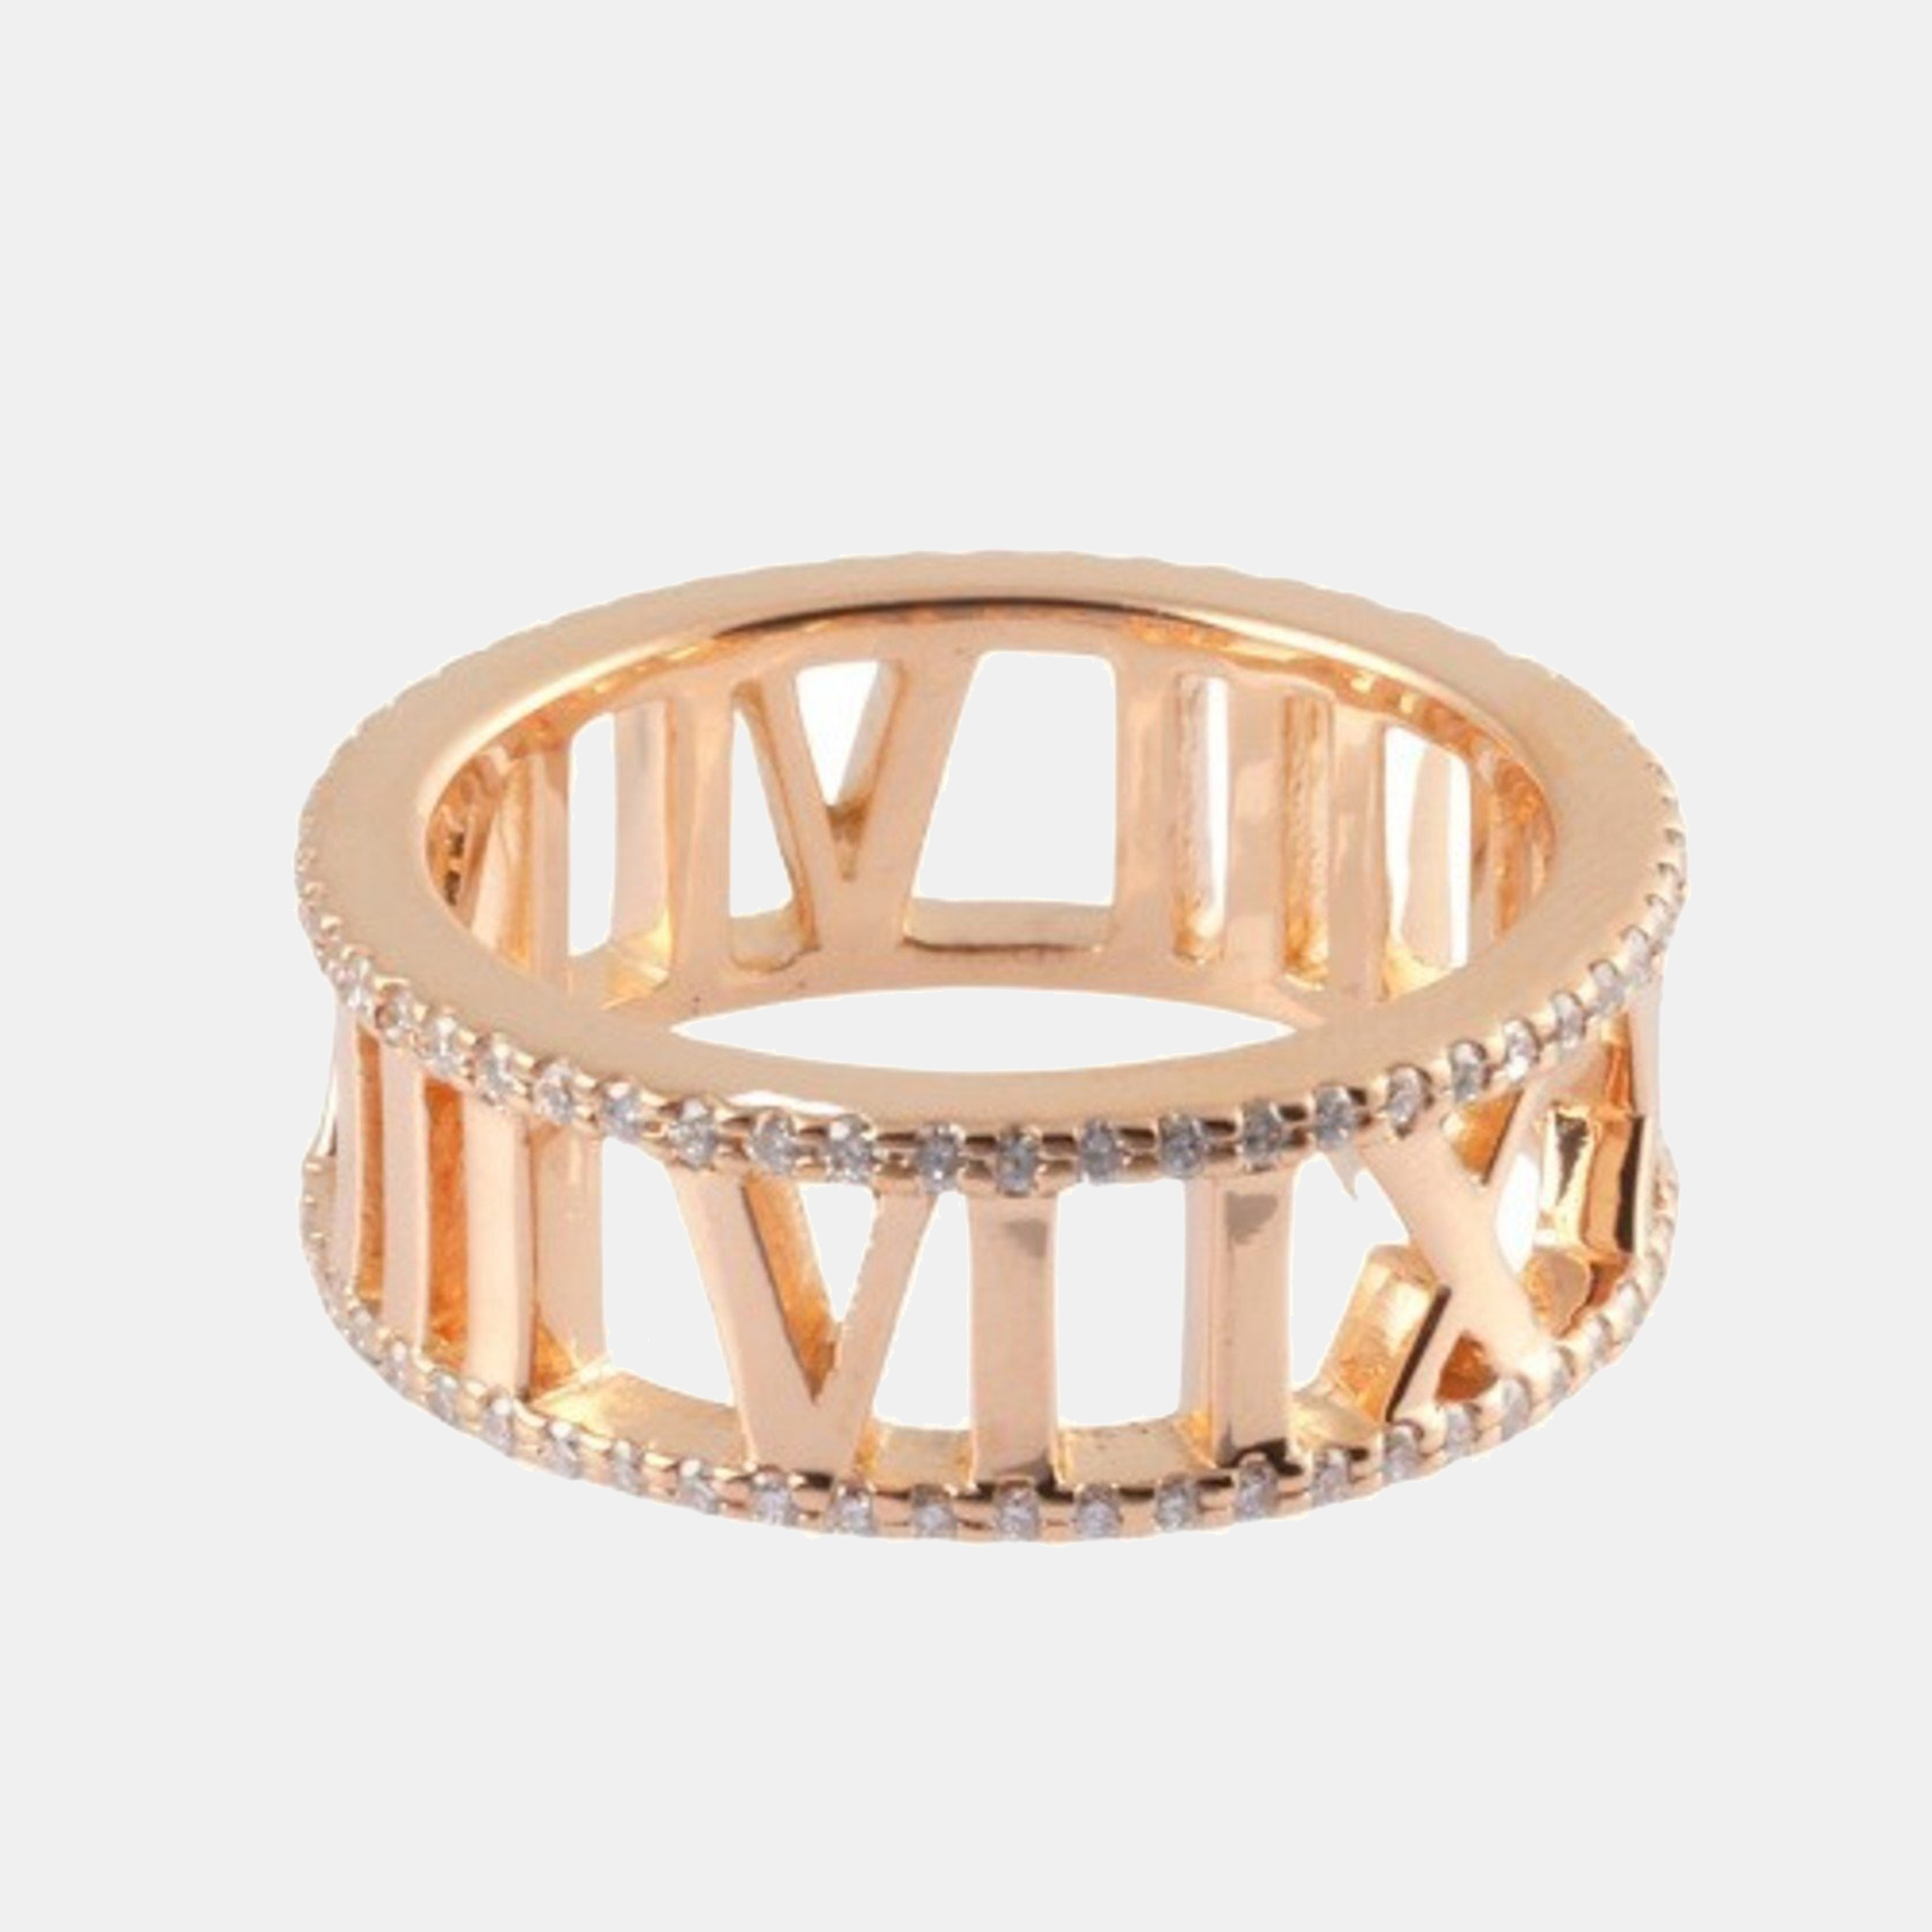 Tiffany & Co. Atlas 18K Rose Gold Diamond Ring EU 49